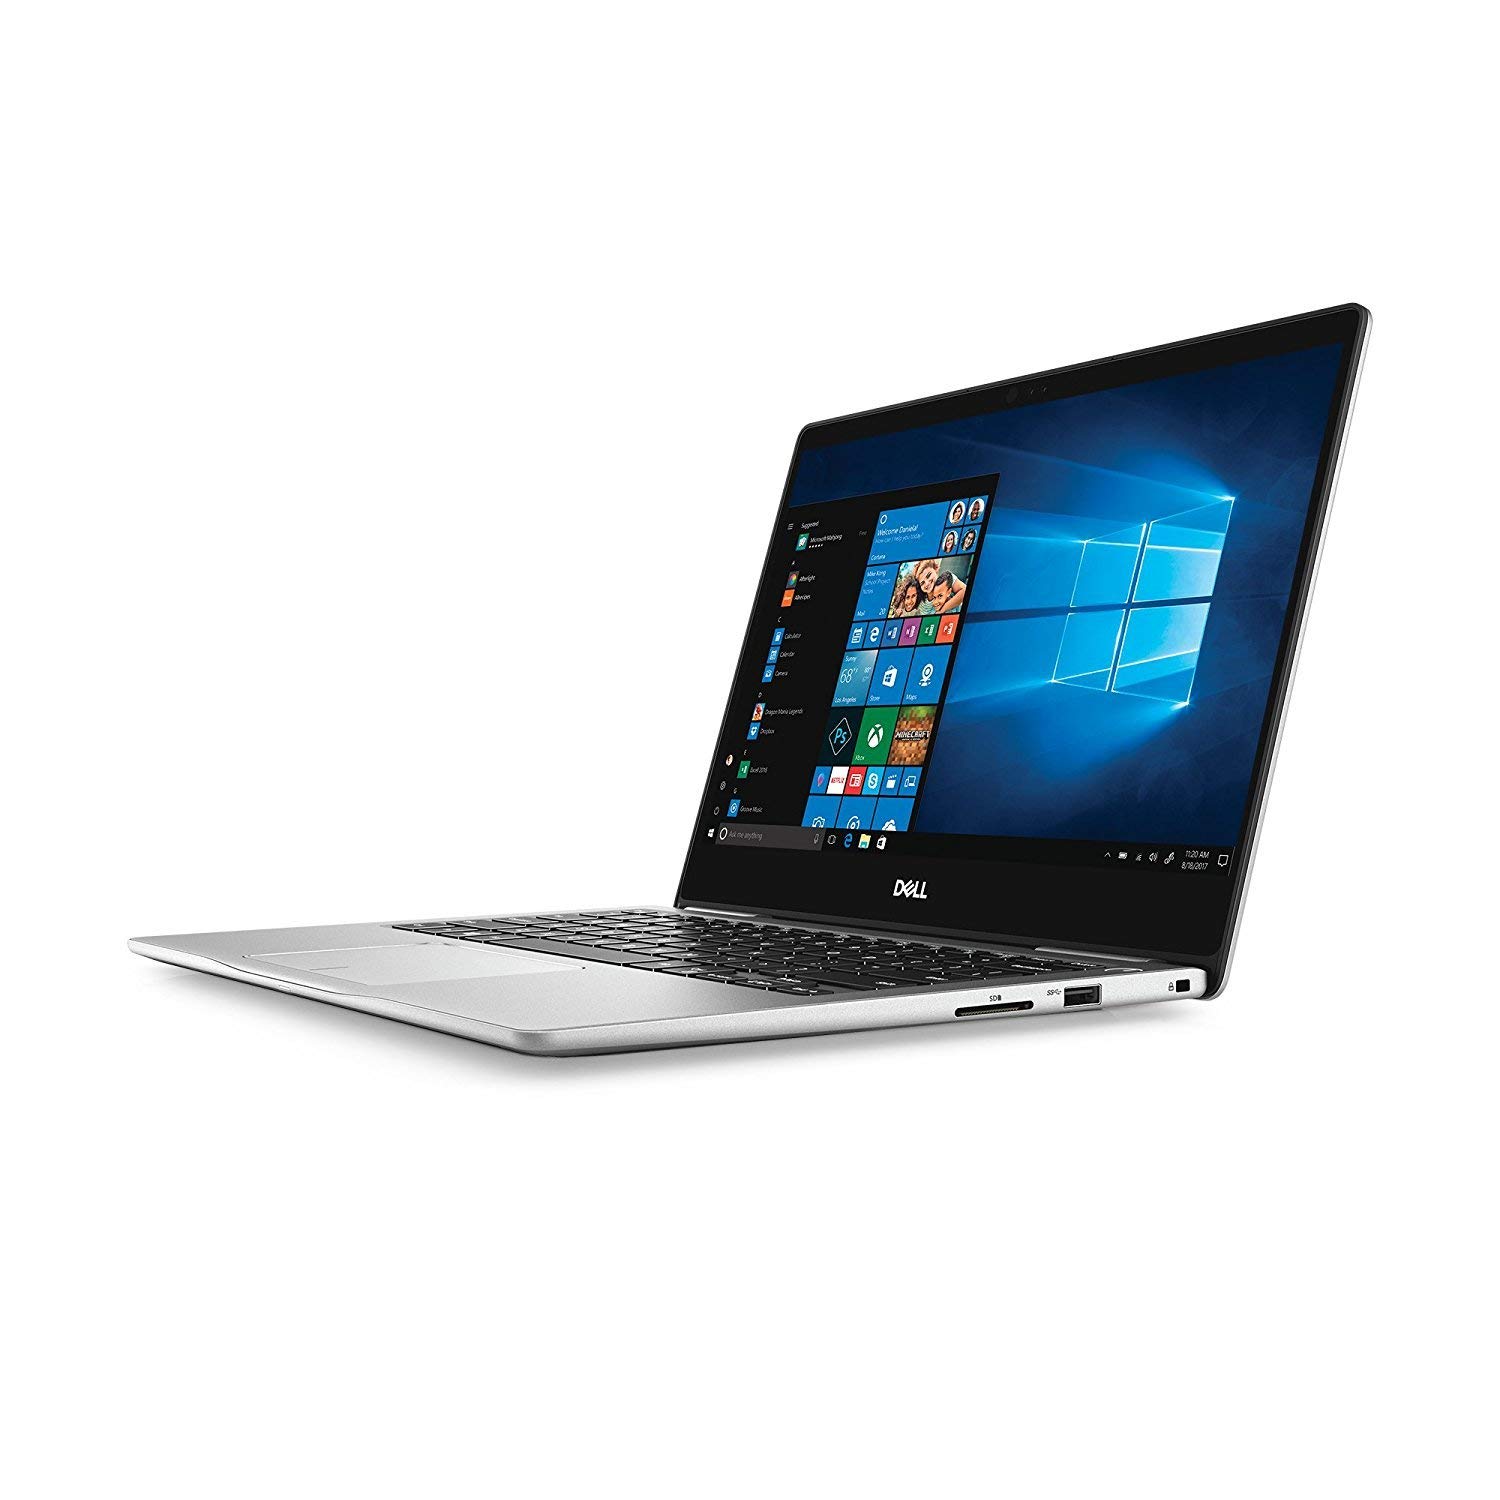 2018 New Dell Inspiron 13 7000 Premium Flagship Laptop, 13.3" FHD IPS Touchscreen, Intel Quad-Core i5-8250U (Beat i7-7500U), 8GB DDR4, 256GB SSD, Backlit Keyboard, WiFi, Bluetooth, HDMI, Windows 10